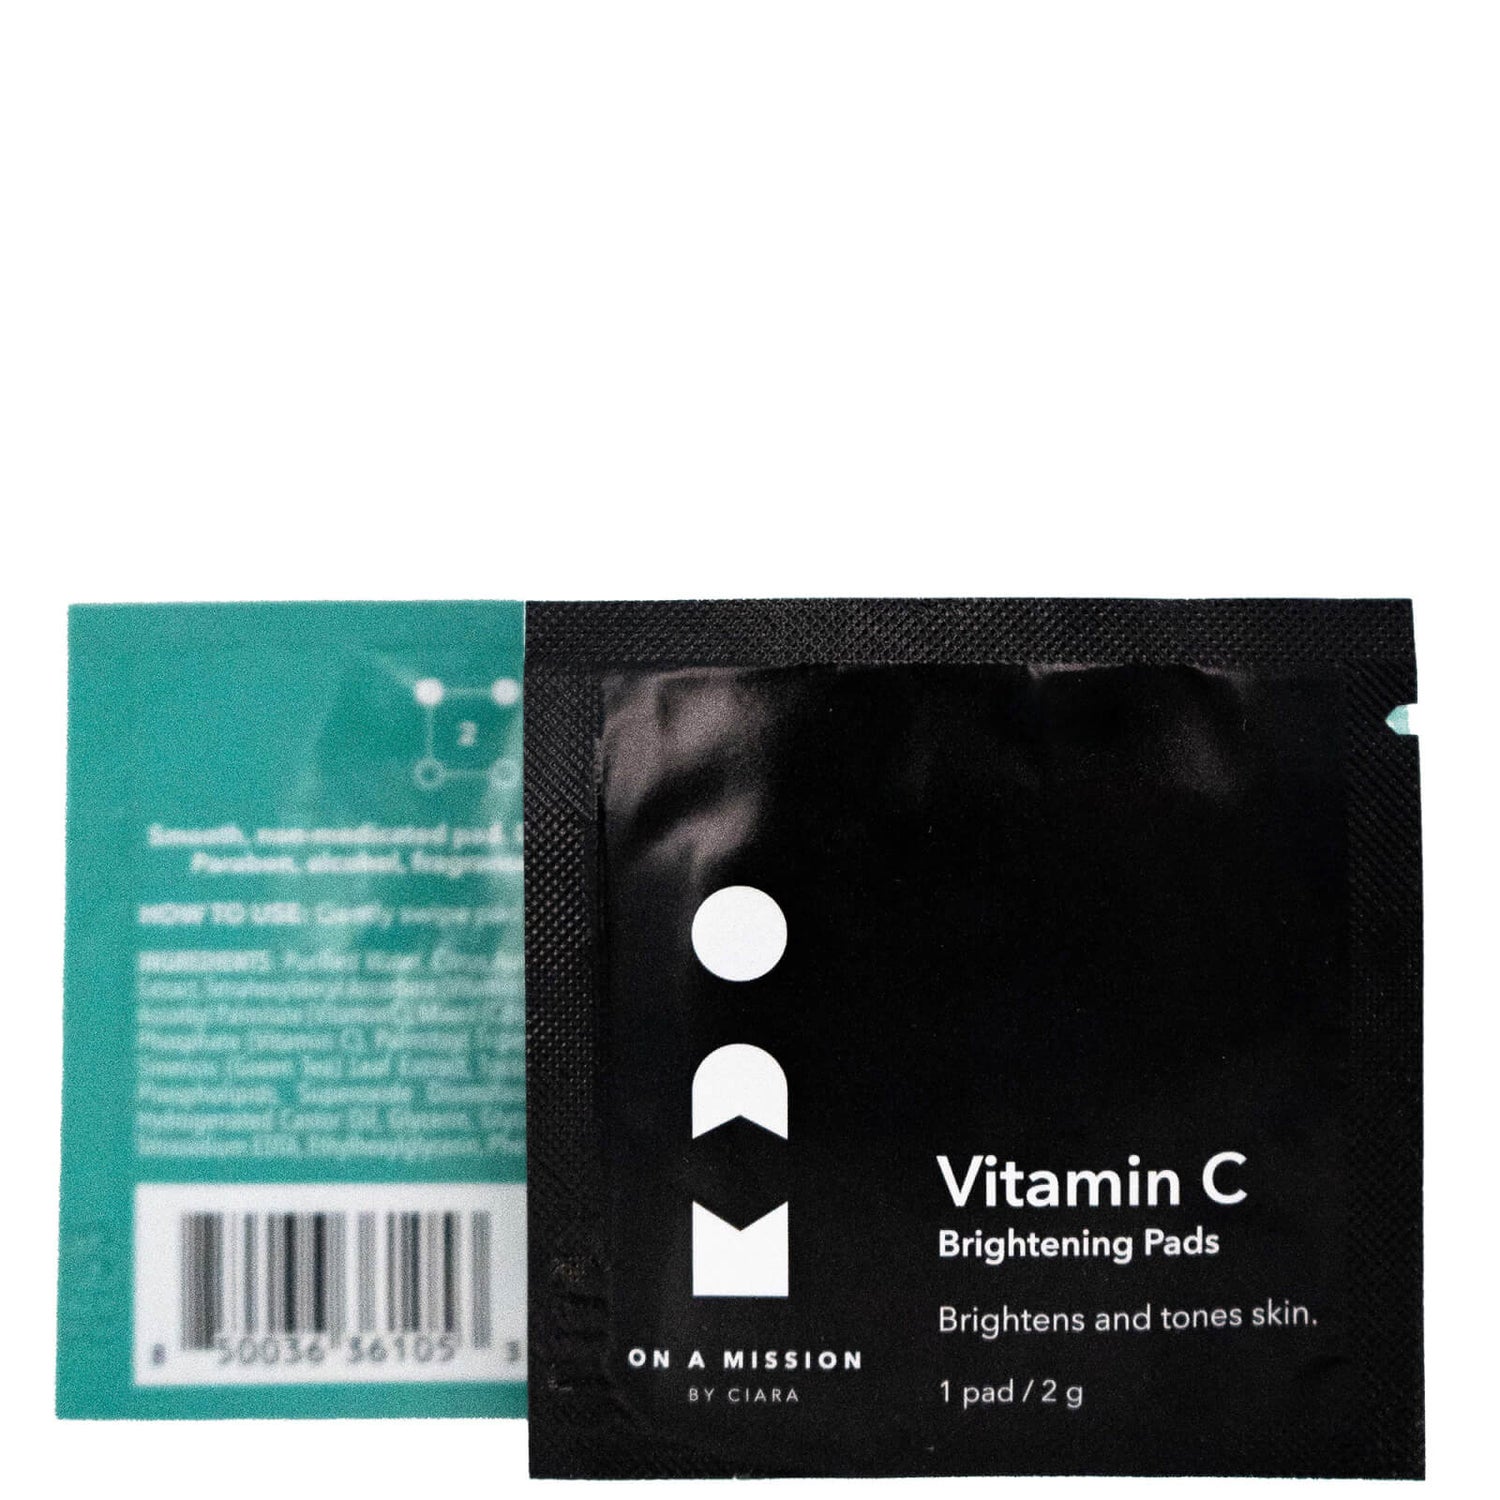 OAM by Ciara Vitamin C Brightening Pad Sample Packet 2g (Worth $5.00)